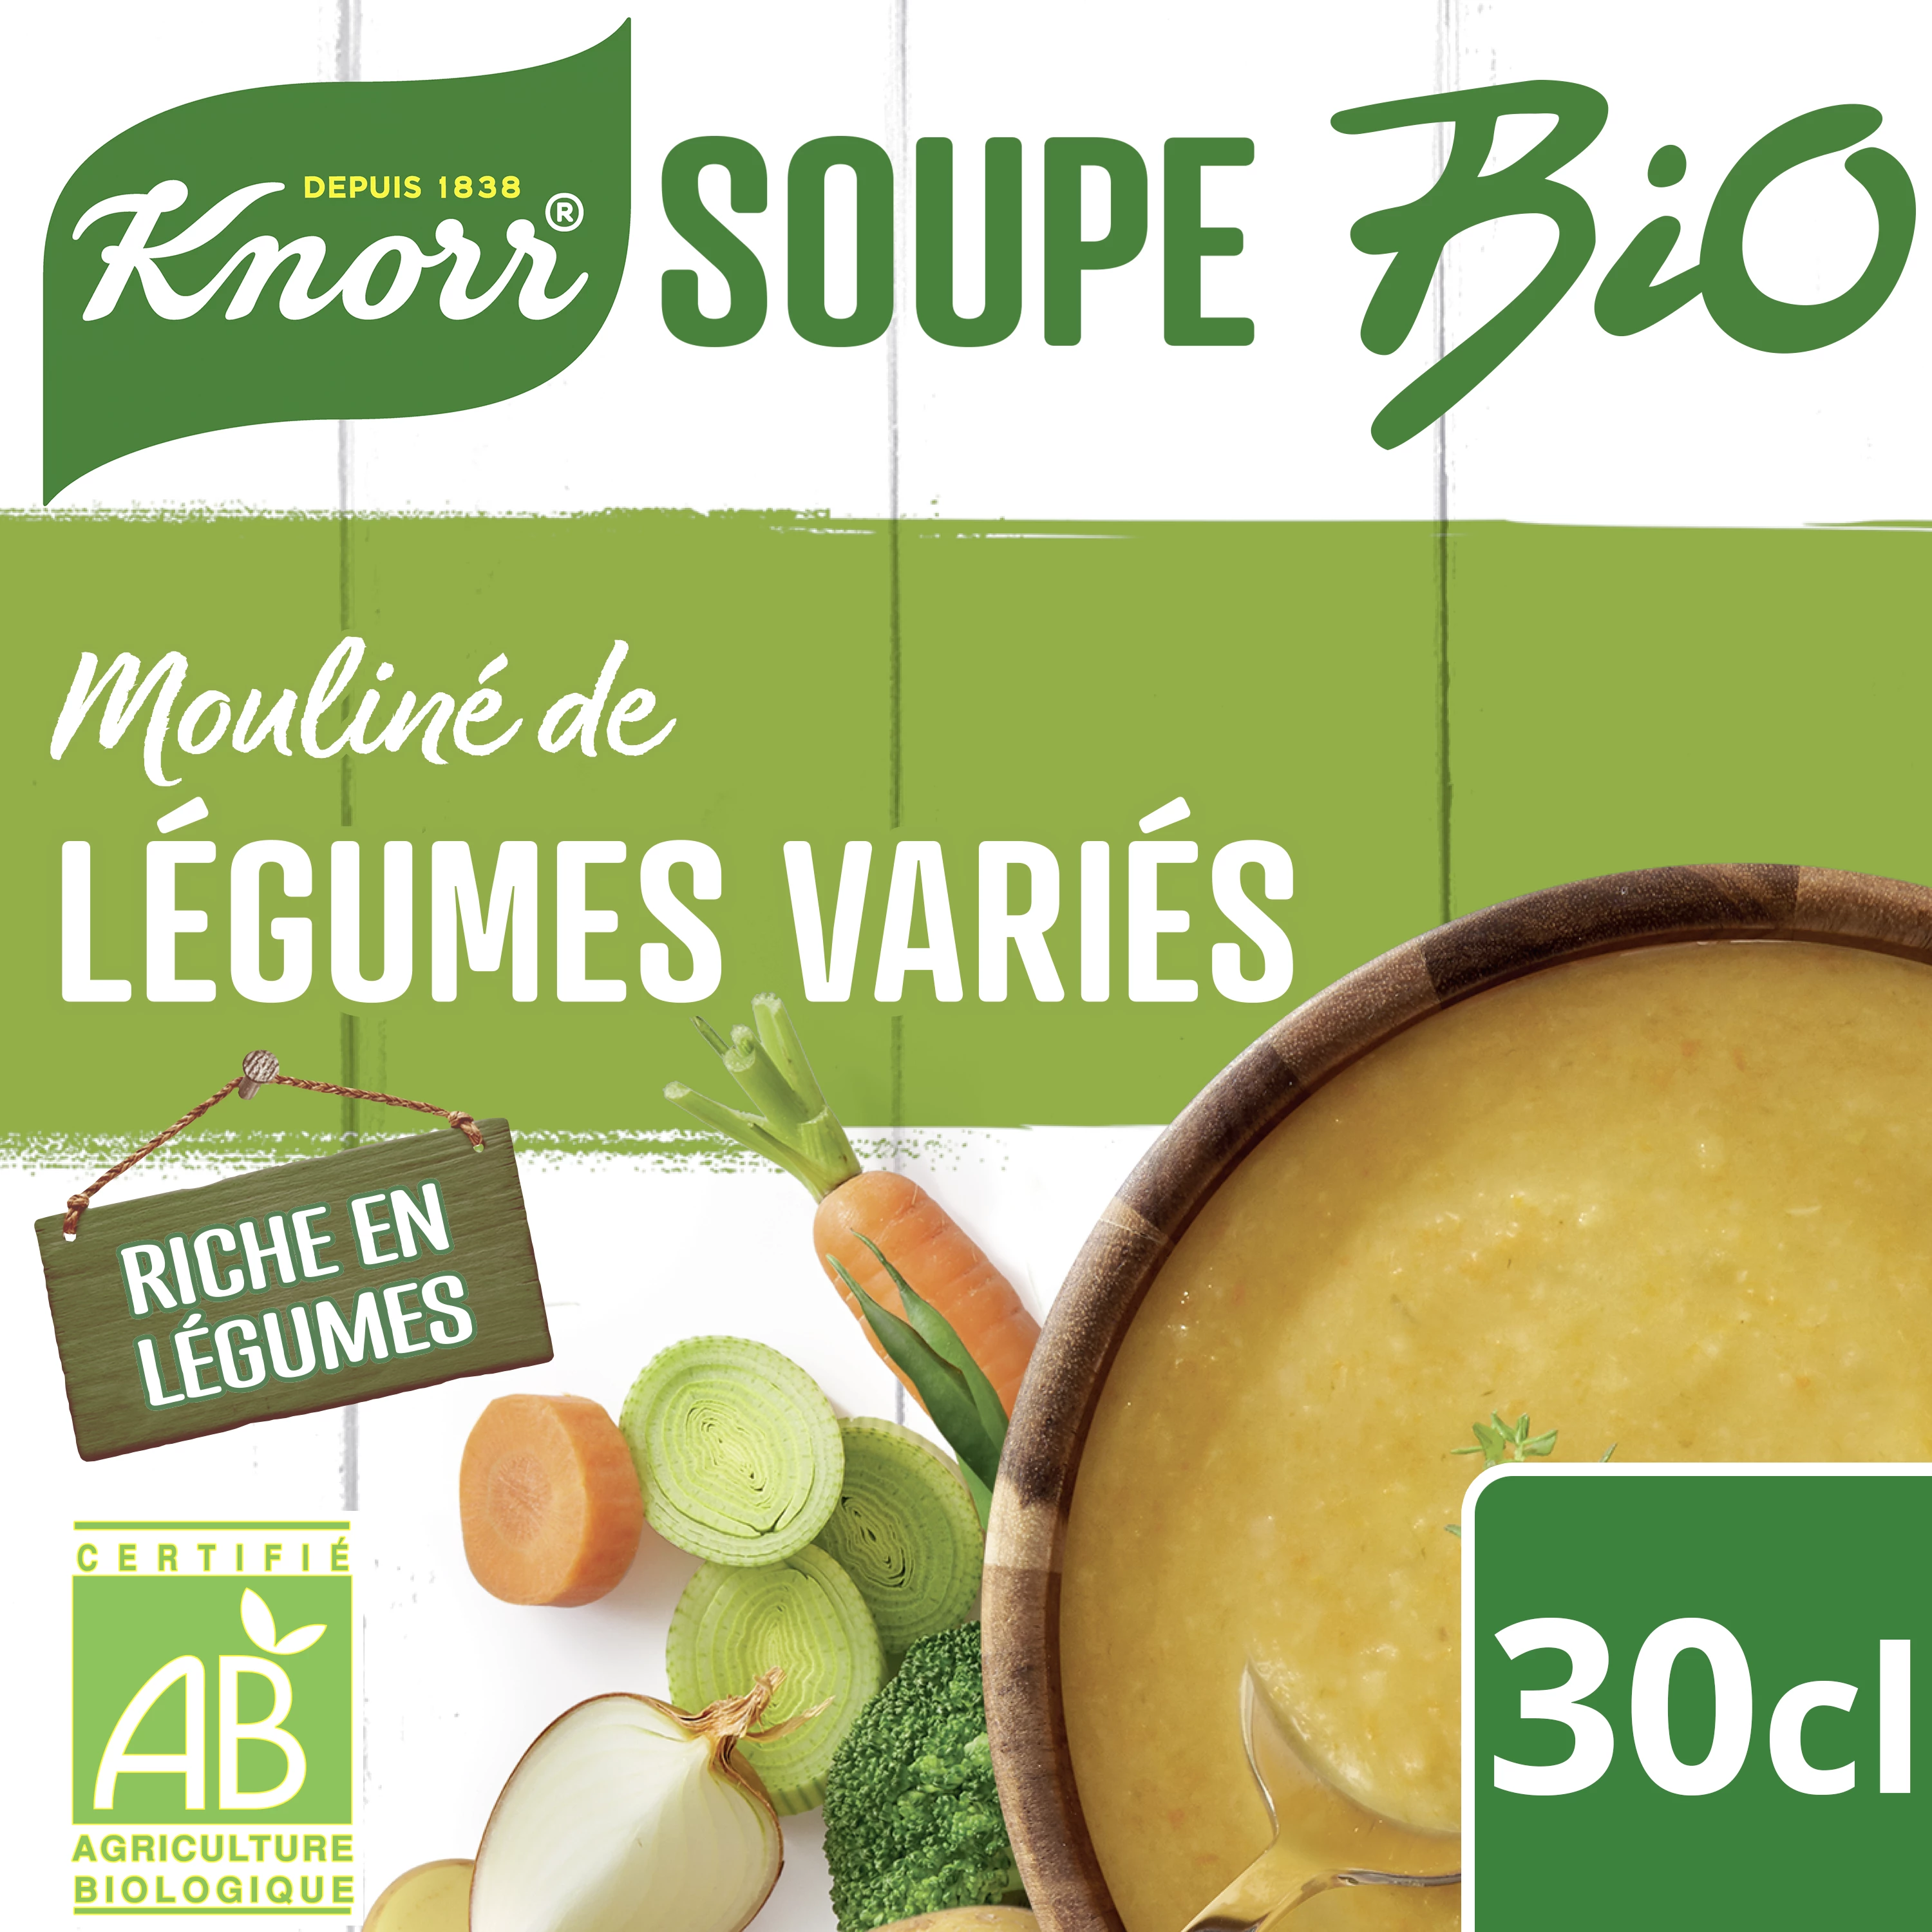 Sopa Mouliné de verduras de la huerta ecológica 30cl - KNORR